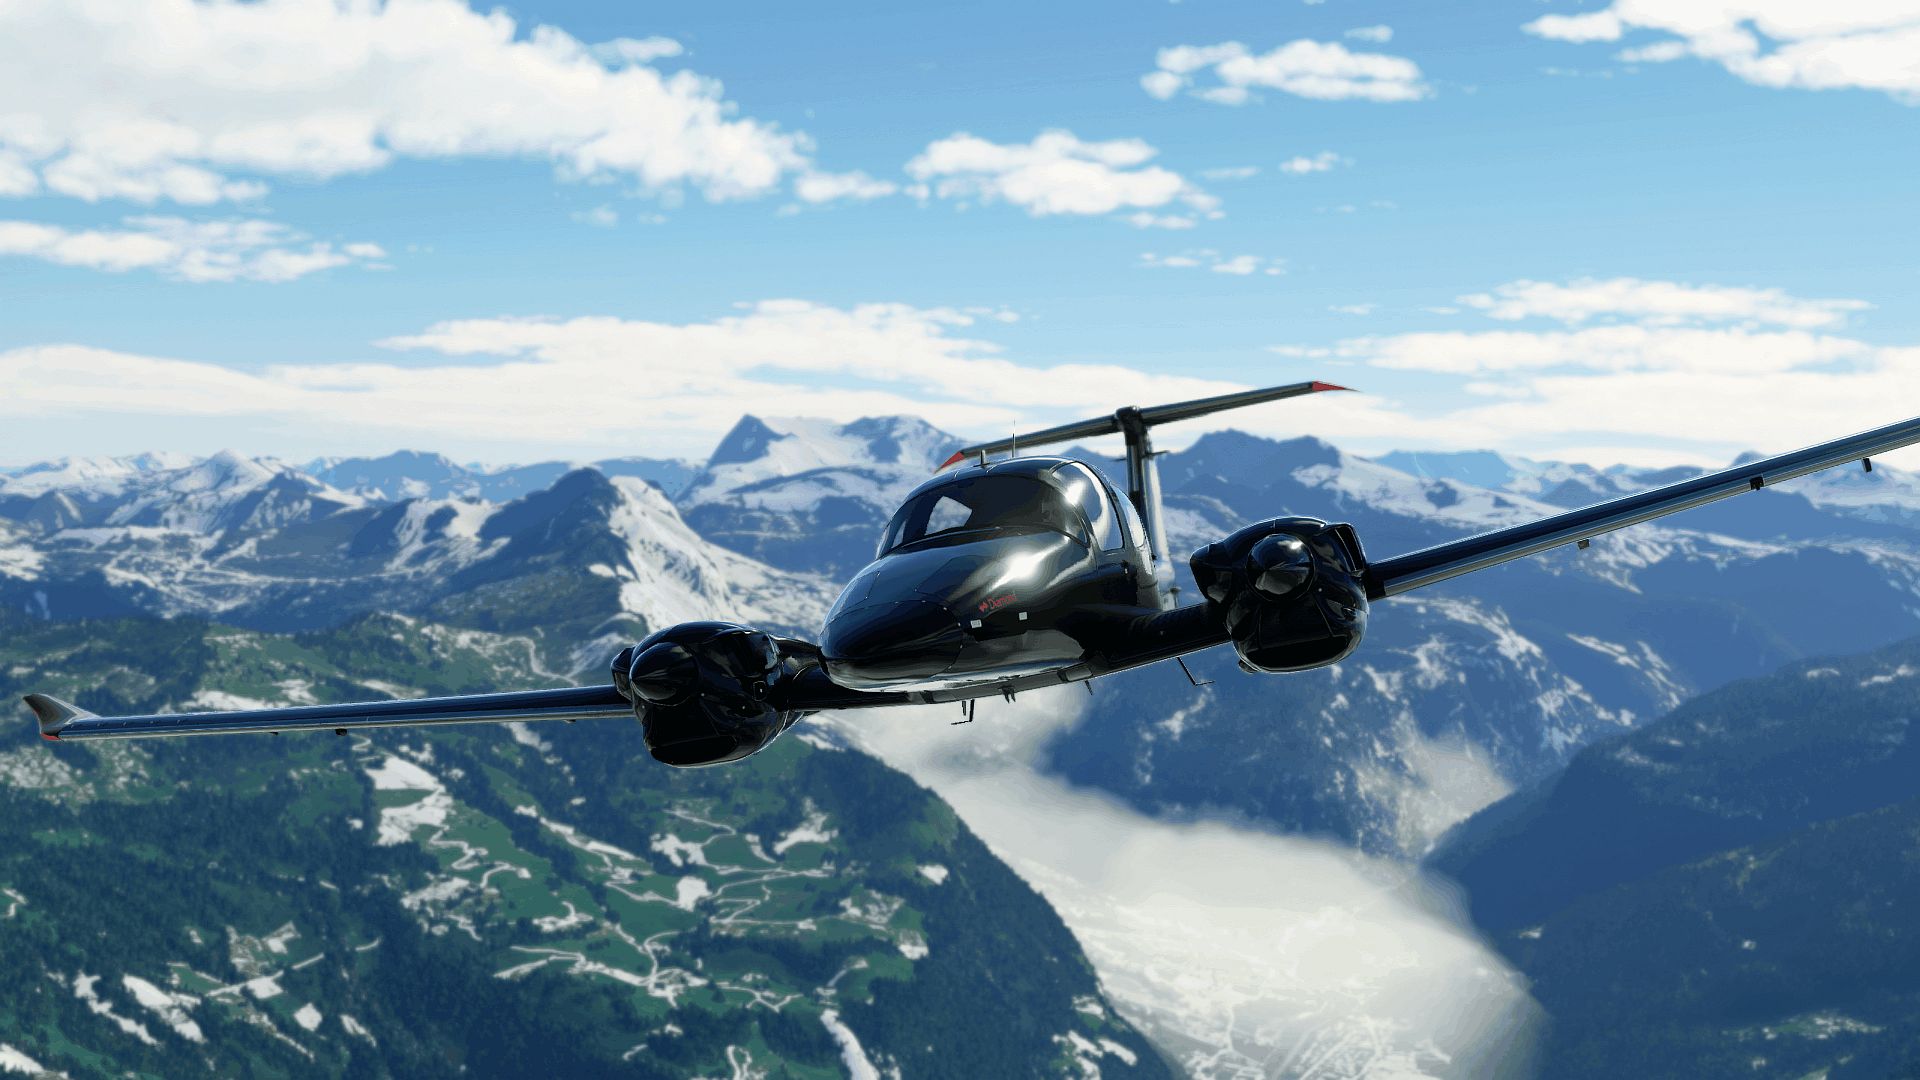 Microsoft Flight Simulator will get DLSS support this year